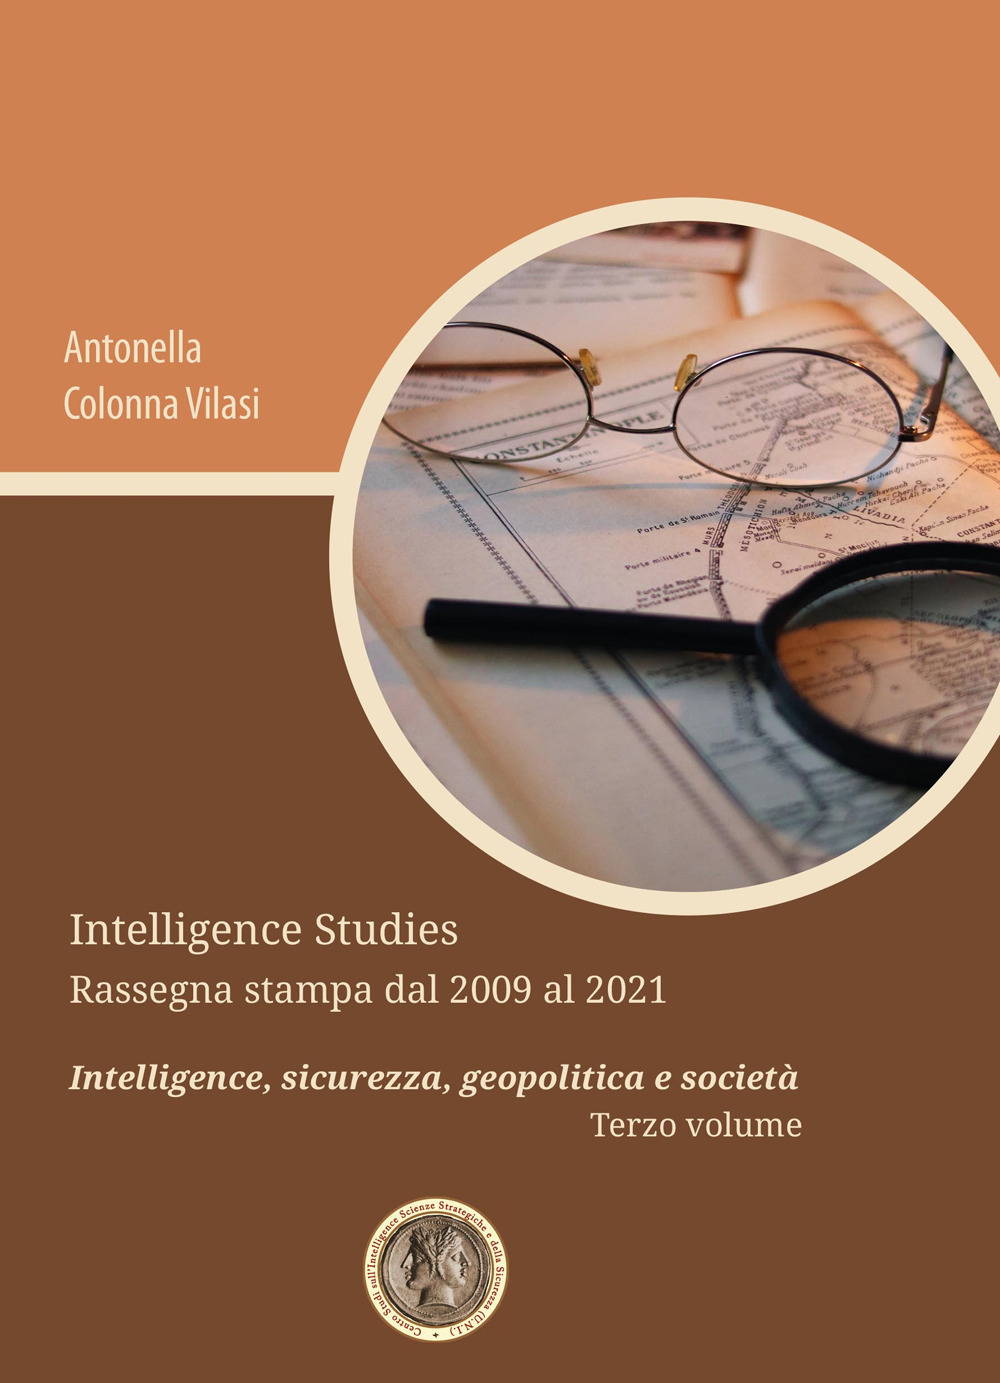 Intelligence Studies. Rassegna stampa dal 2009 al 2021